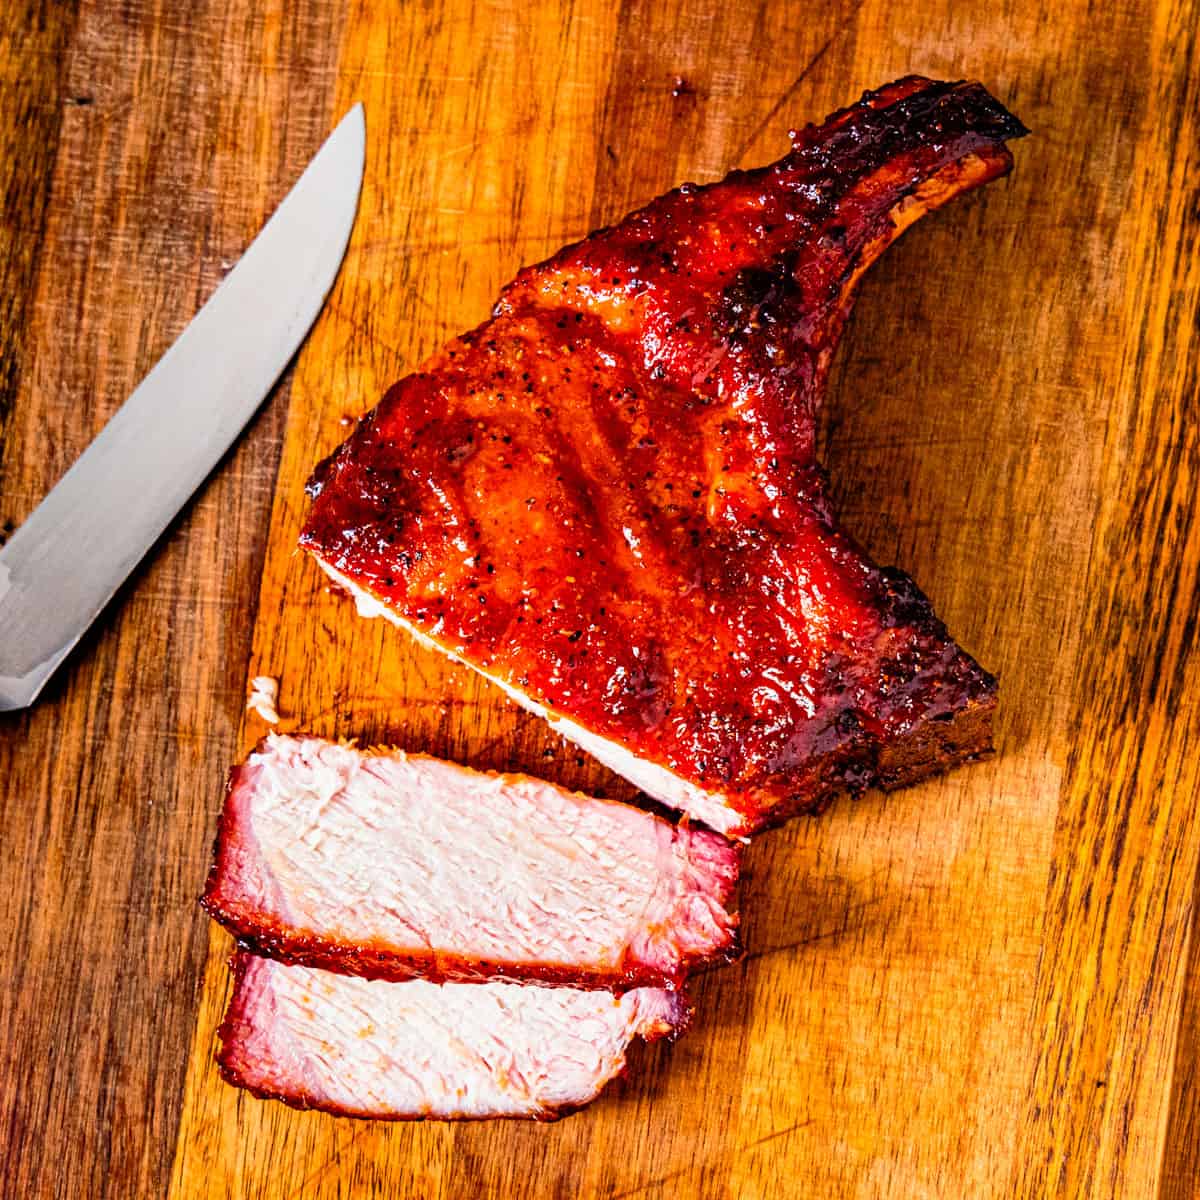 A smoked pork chop on a cutting board.